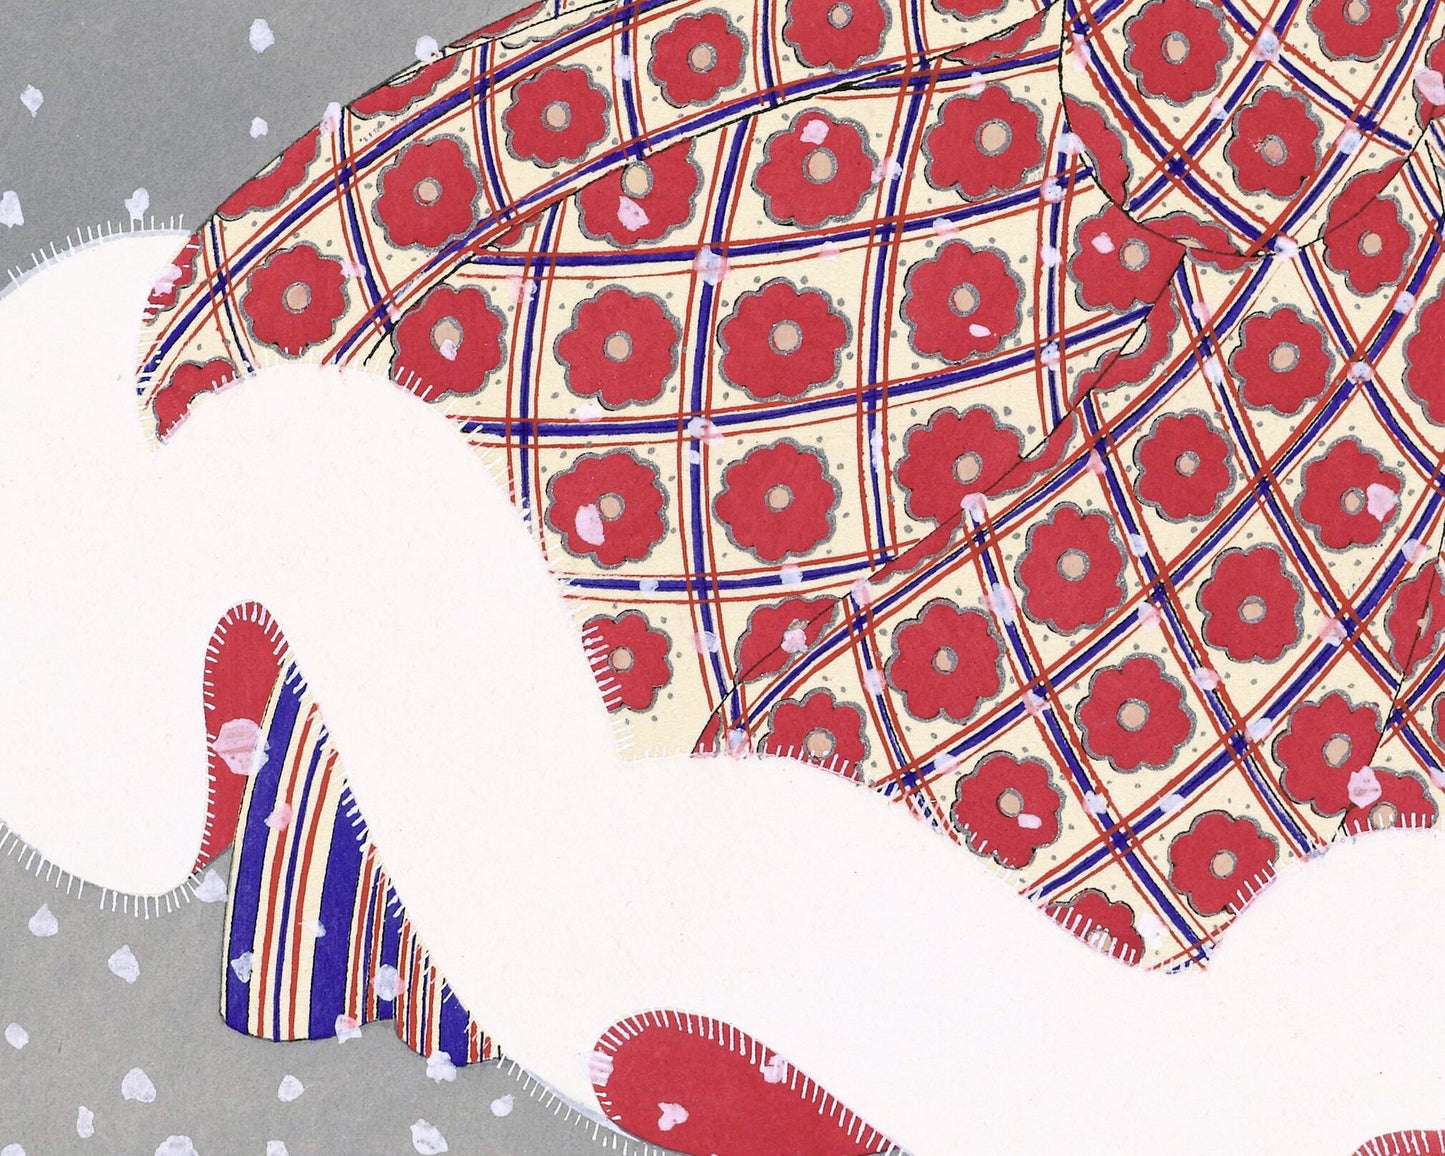 Vintage French fashion | Snow Flakes are the Butterflies of the Season | Paris fashion plate | Christmas art deco art | Female artist